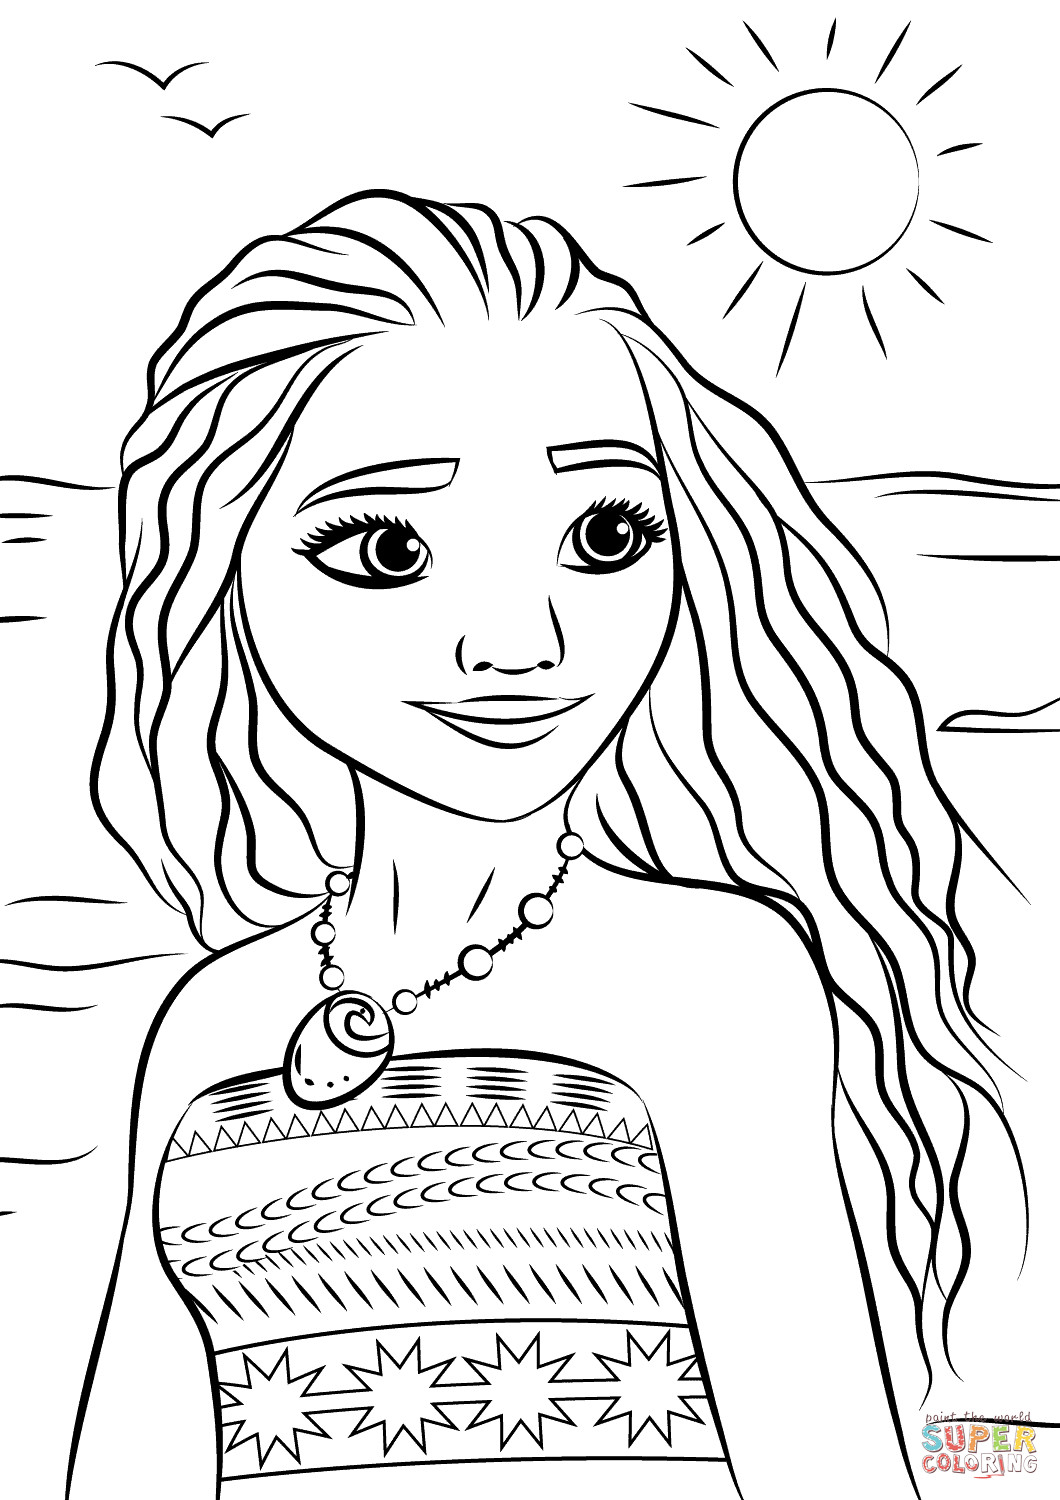 Printable Moana Coloring Pages
 Princess Moana Portrait coloring page